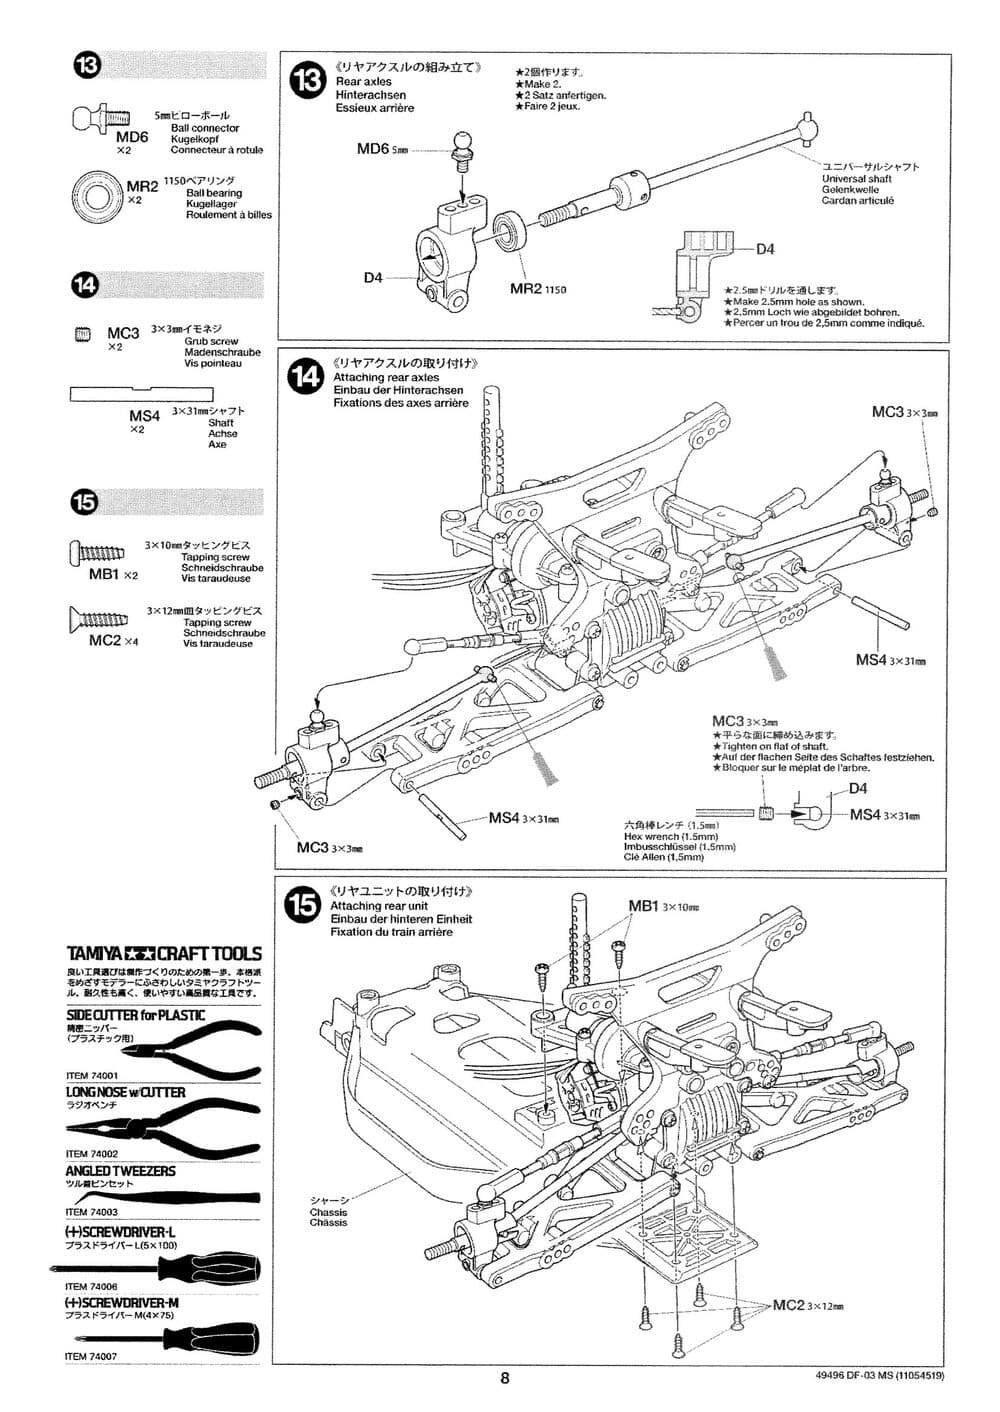 Tamiya - DF-03 MS Chassis Chassis - Manual - Page 8